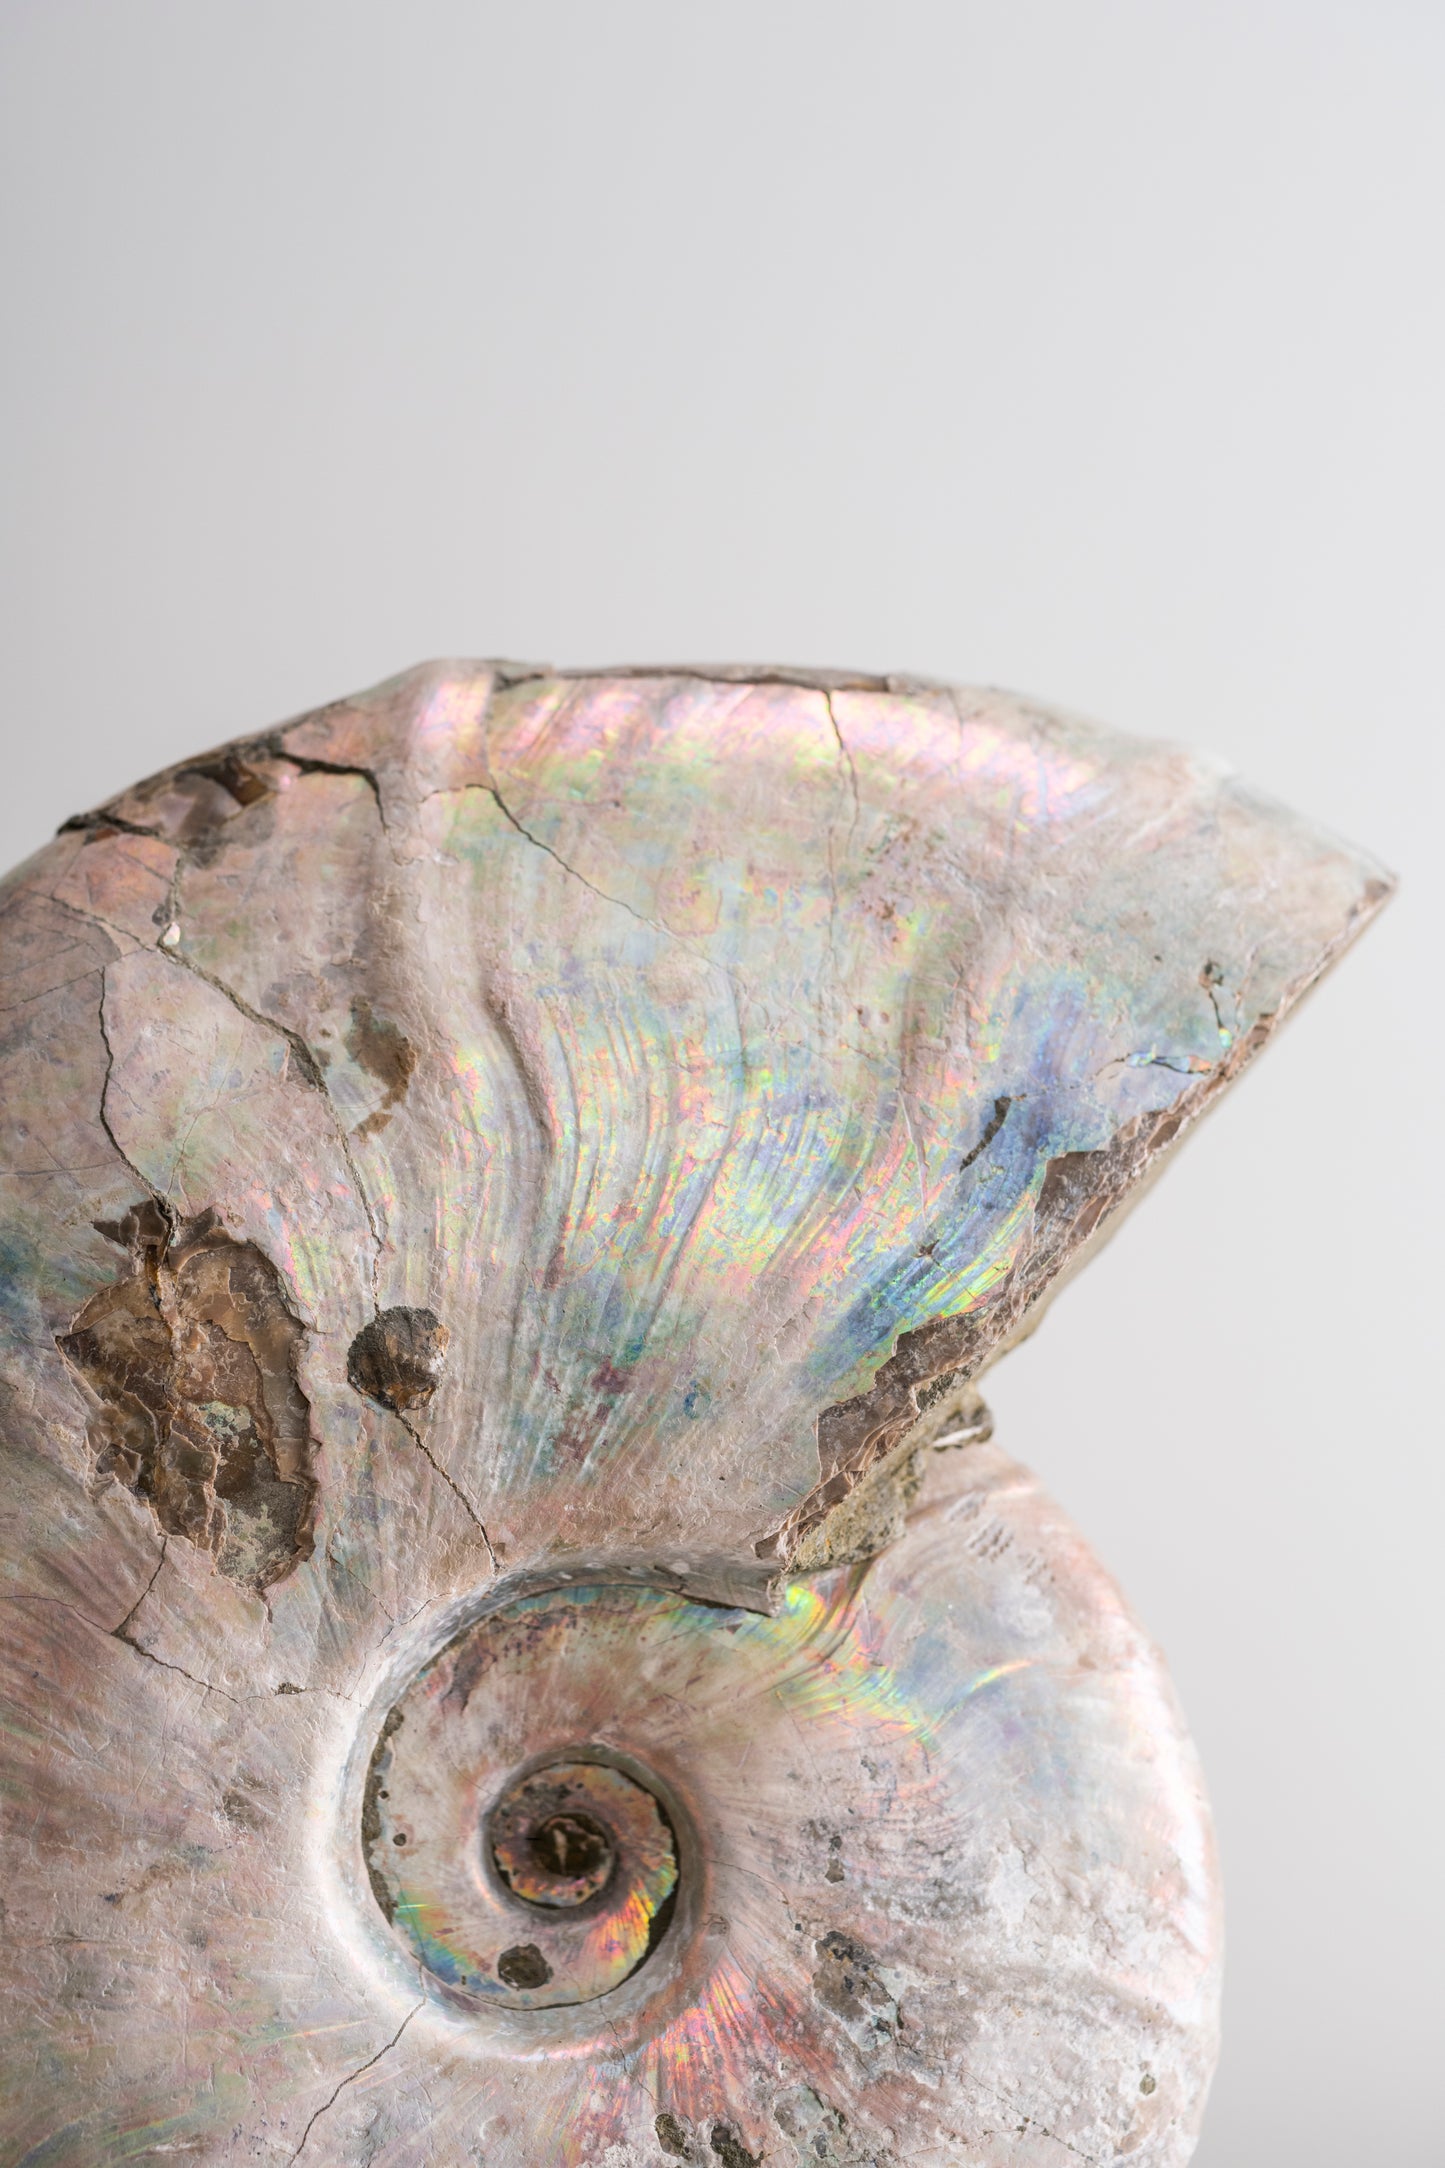 Iridescent ammonite